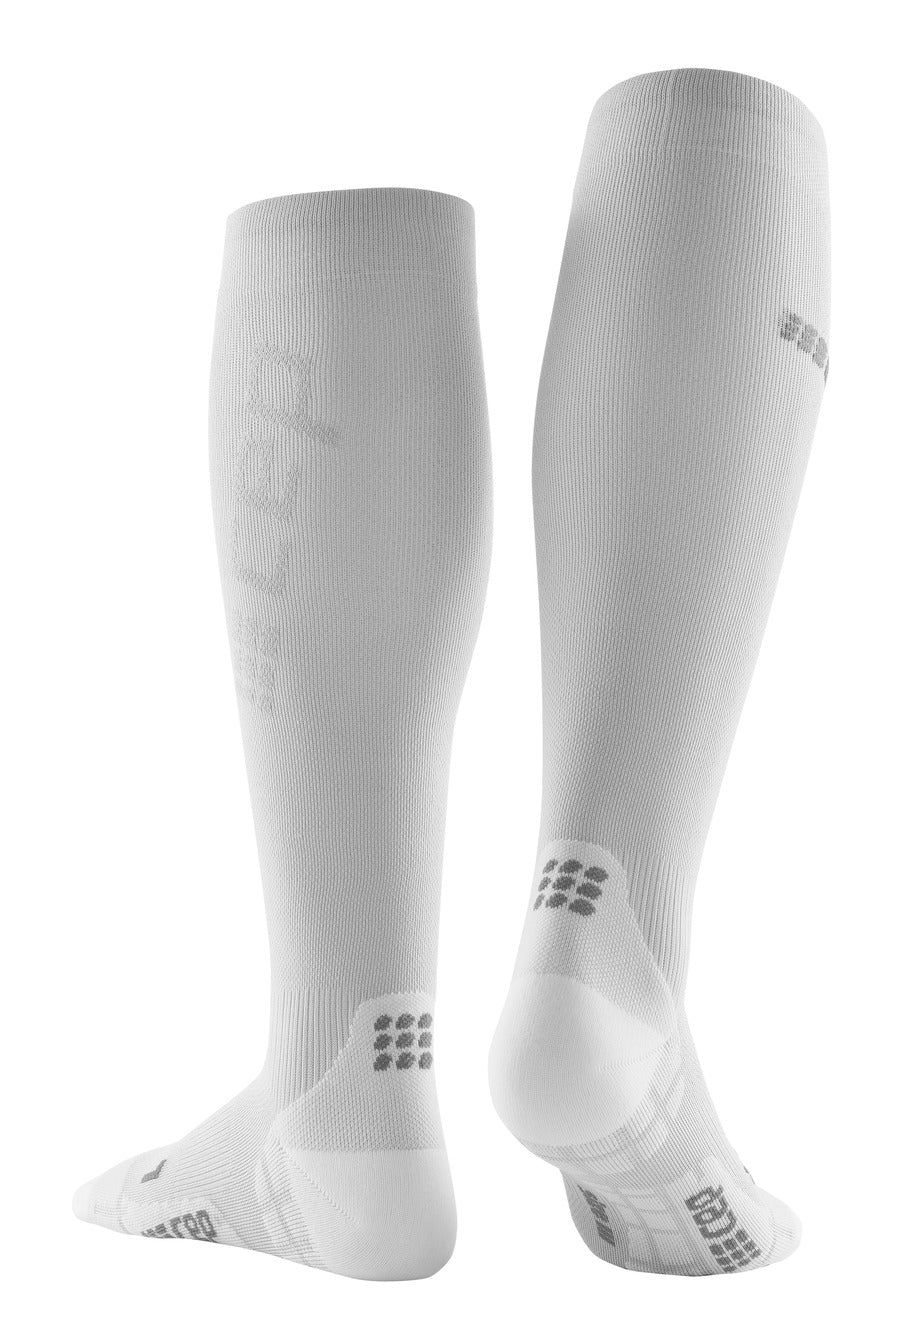 CEP Ultralight Knee-high Compression Sock | Compression Care